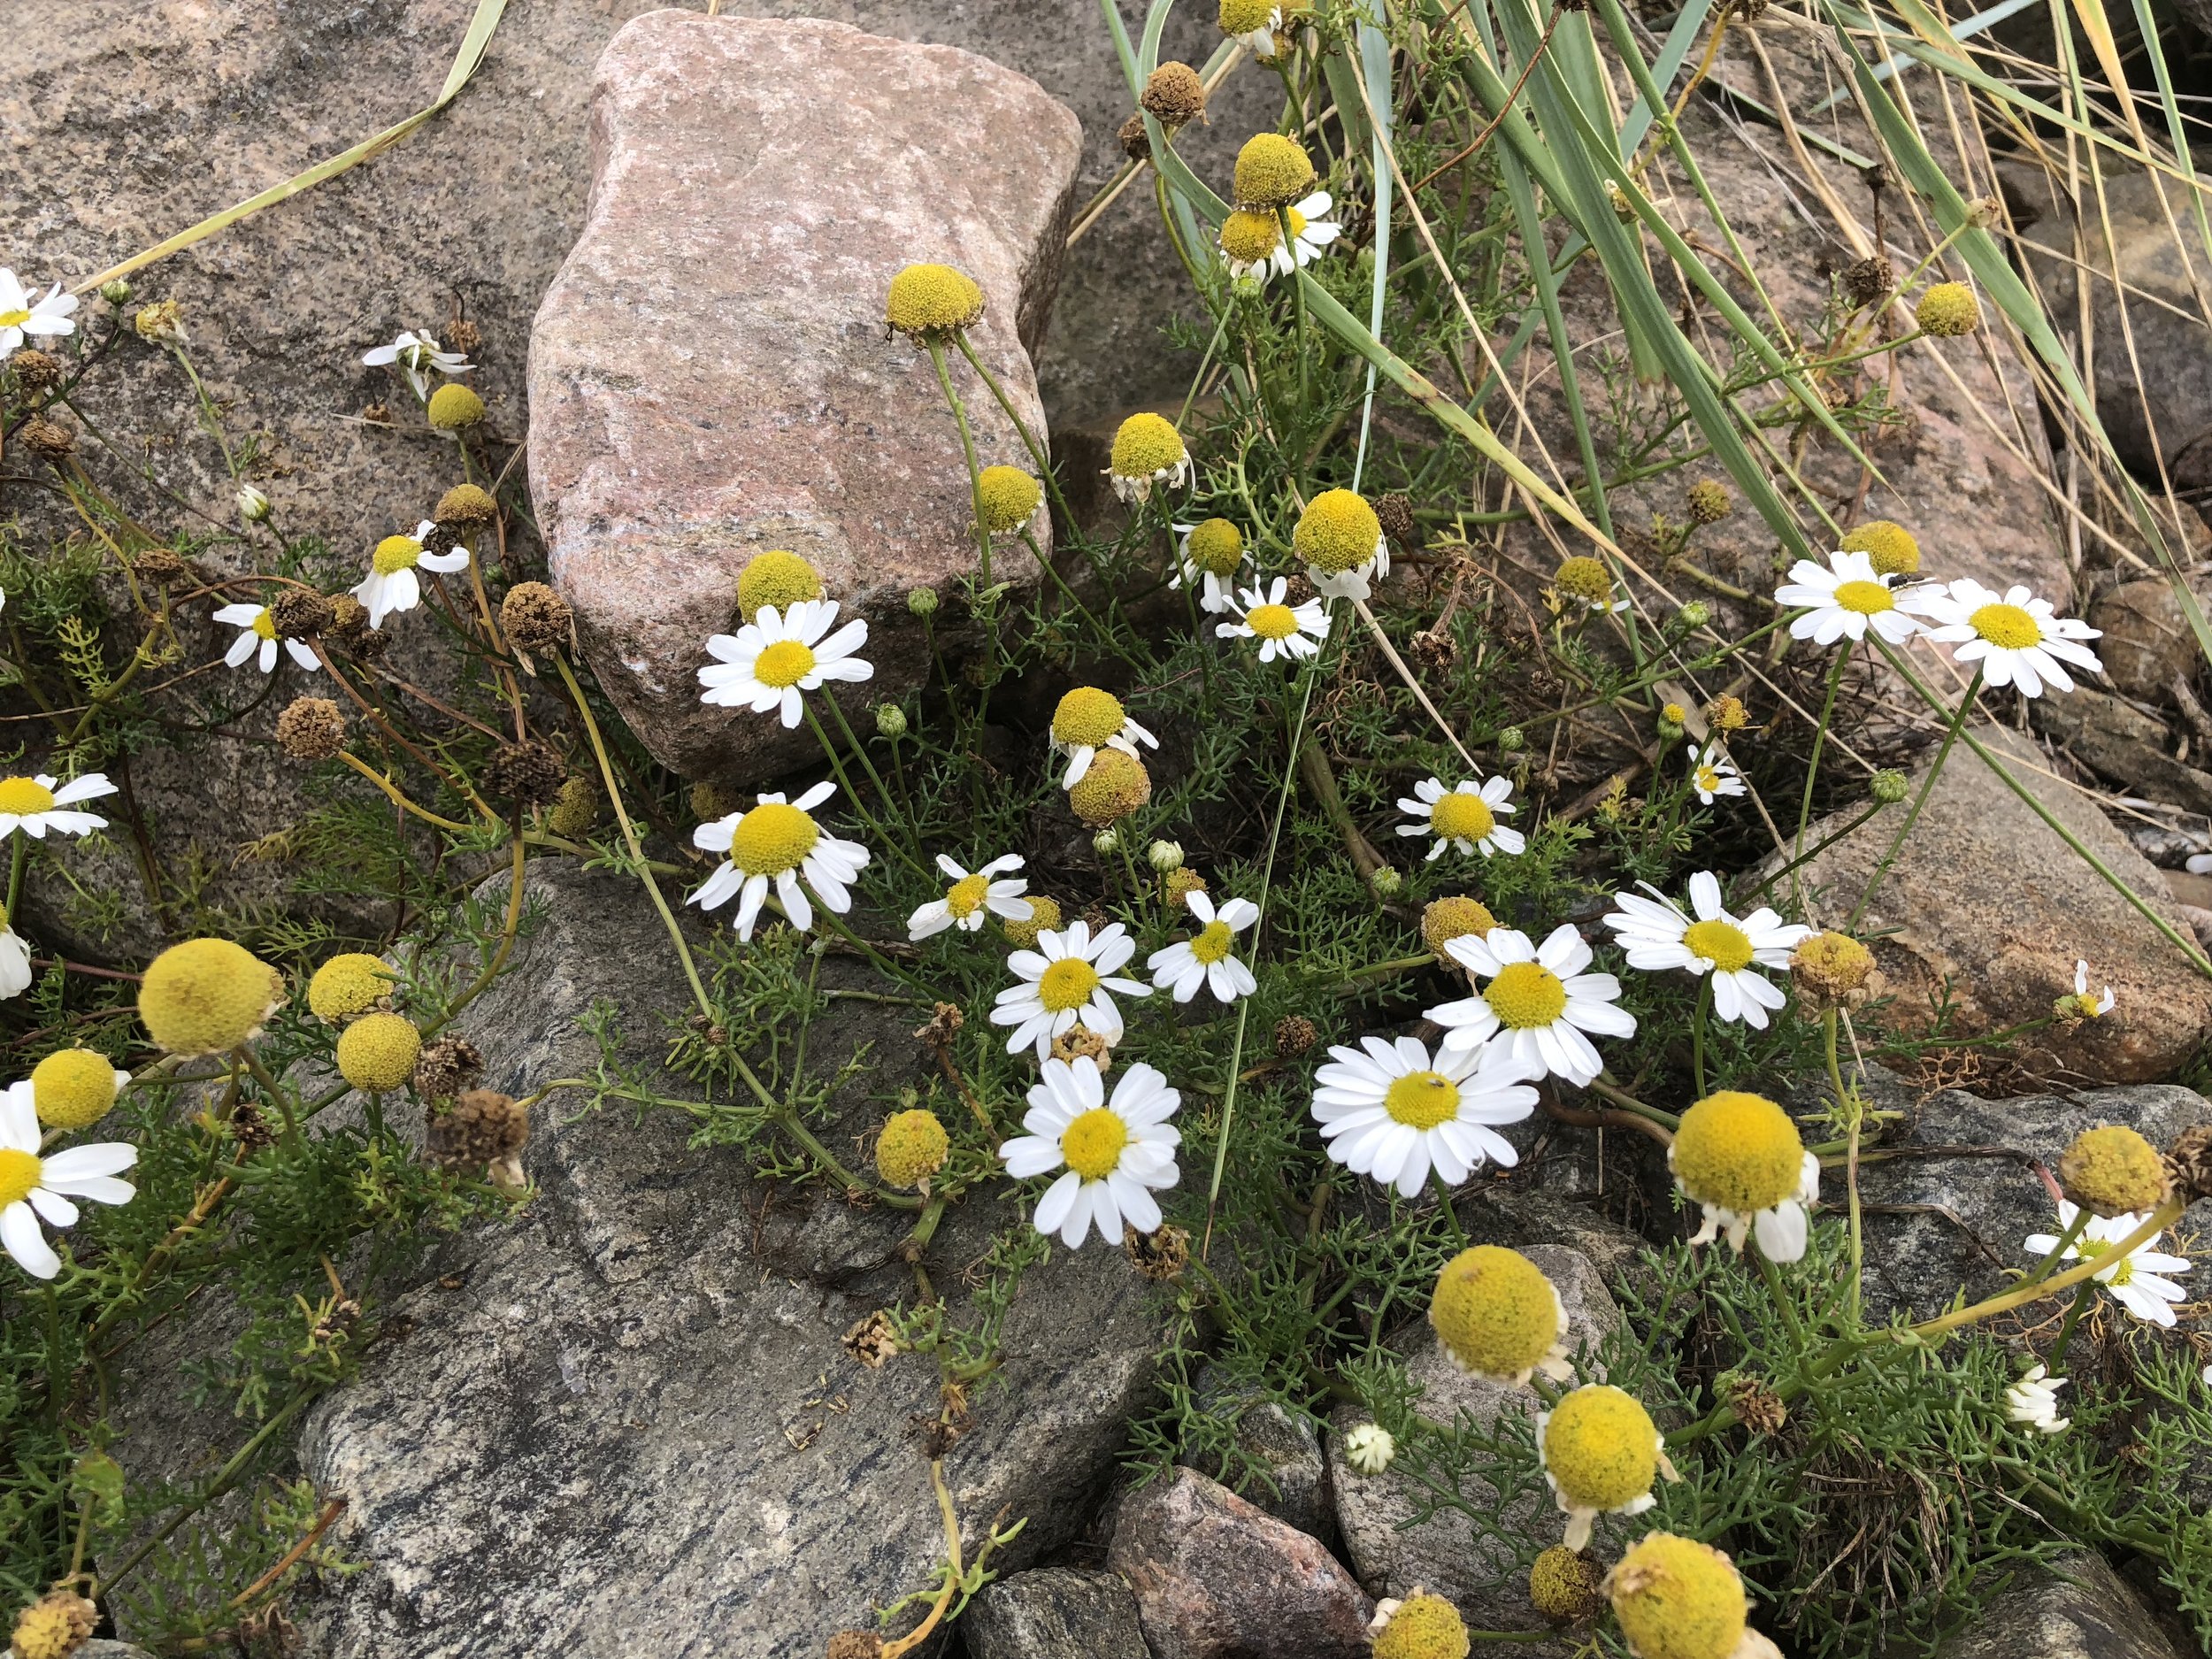 Swedish wildflowers